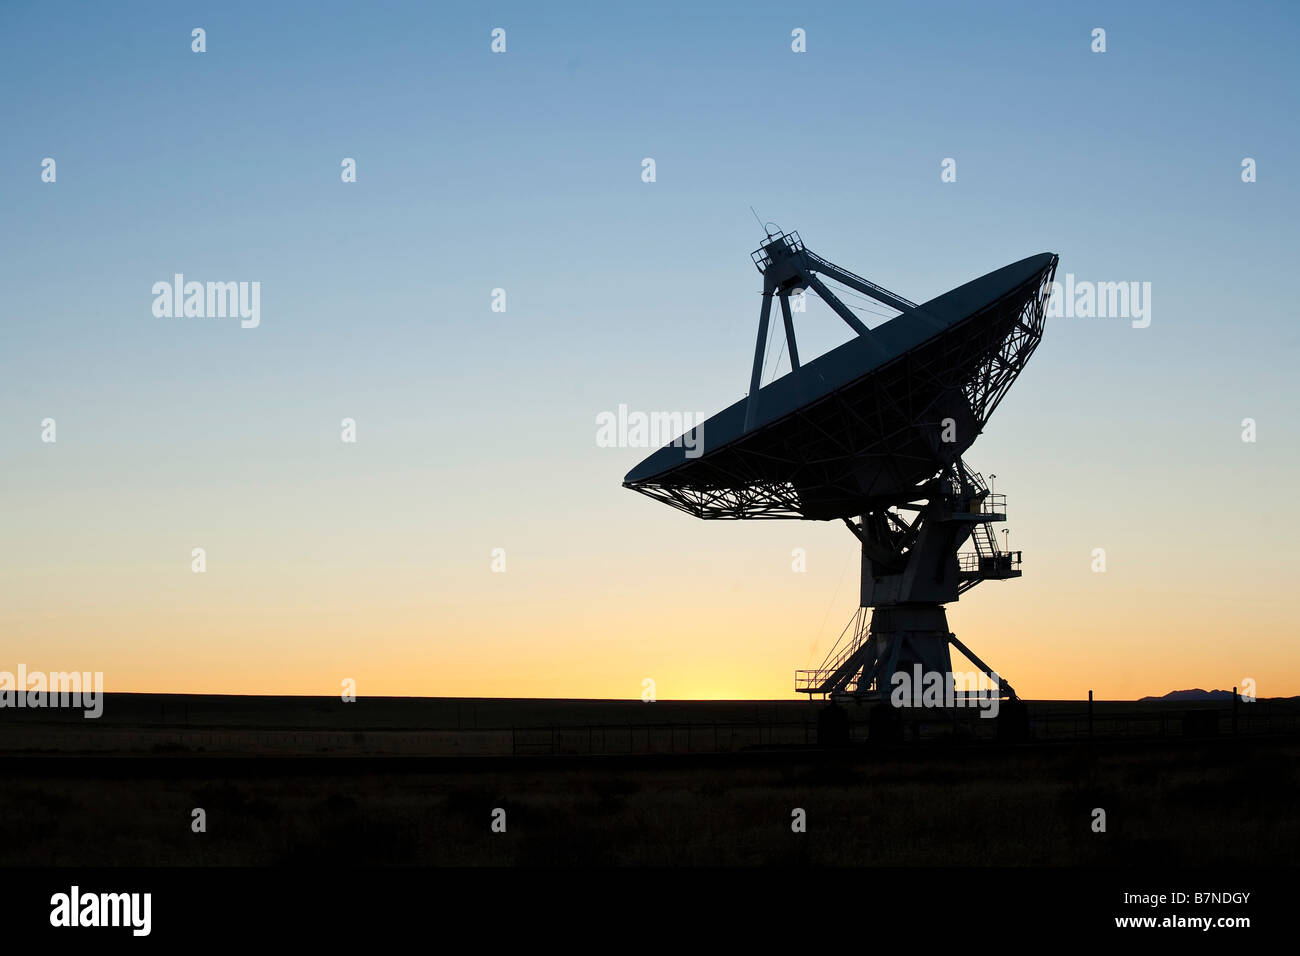 Radiotelescope at sunset Stock Photo